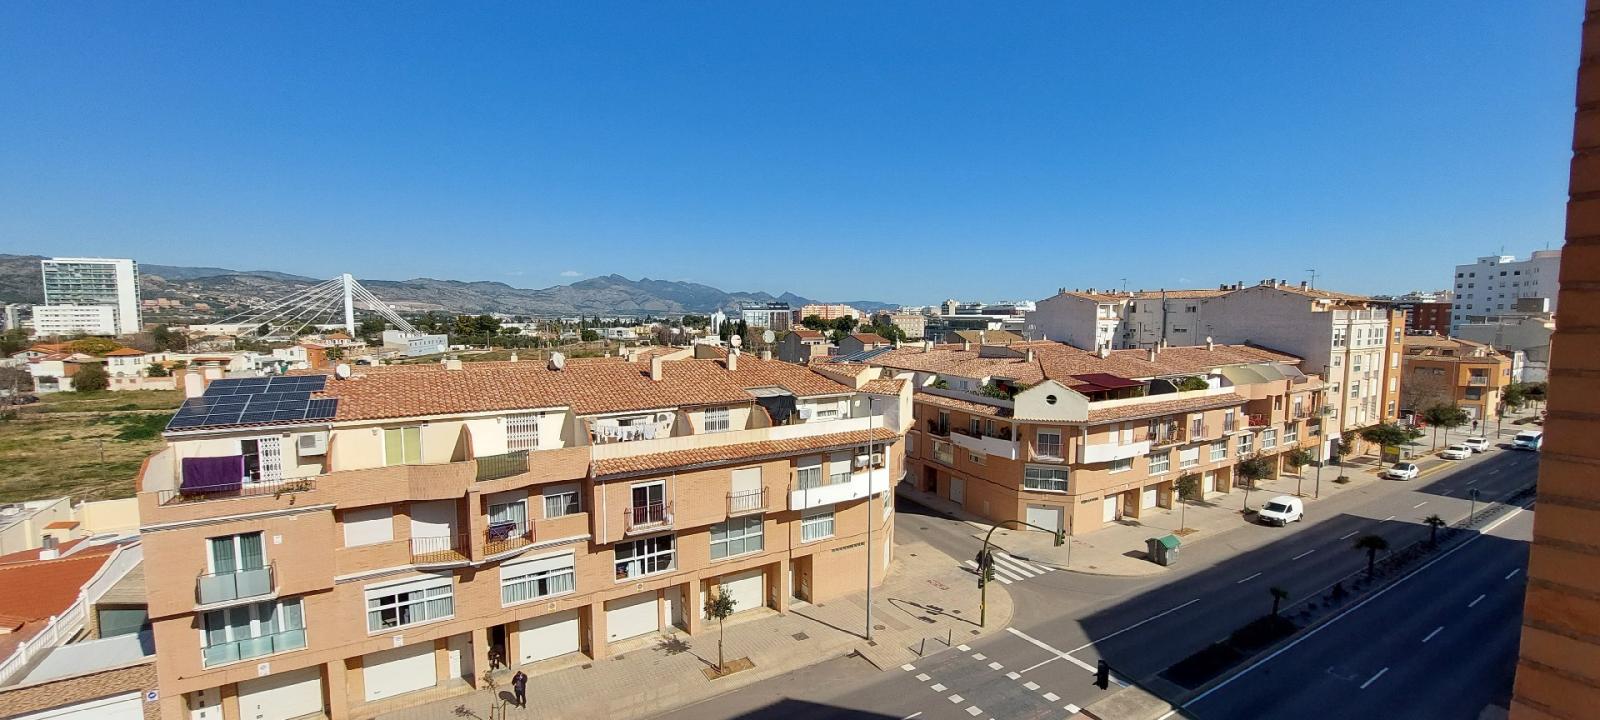 Byt v prodeji in Castellón de la Plana